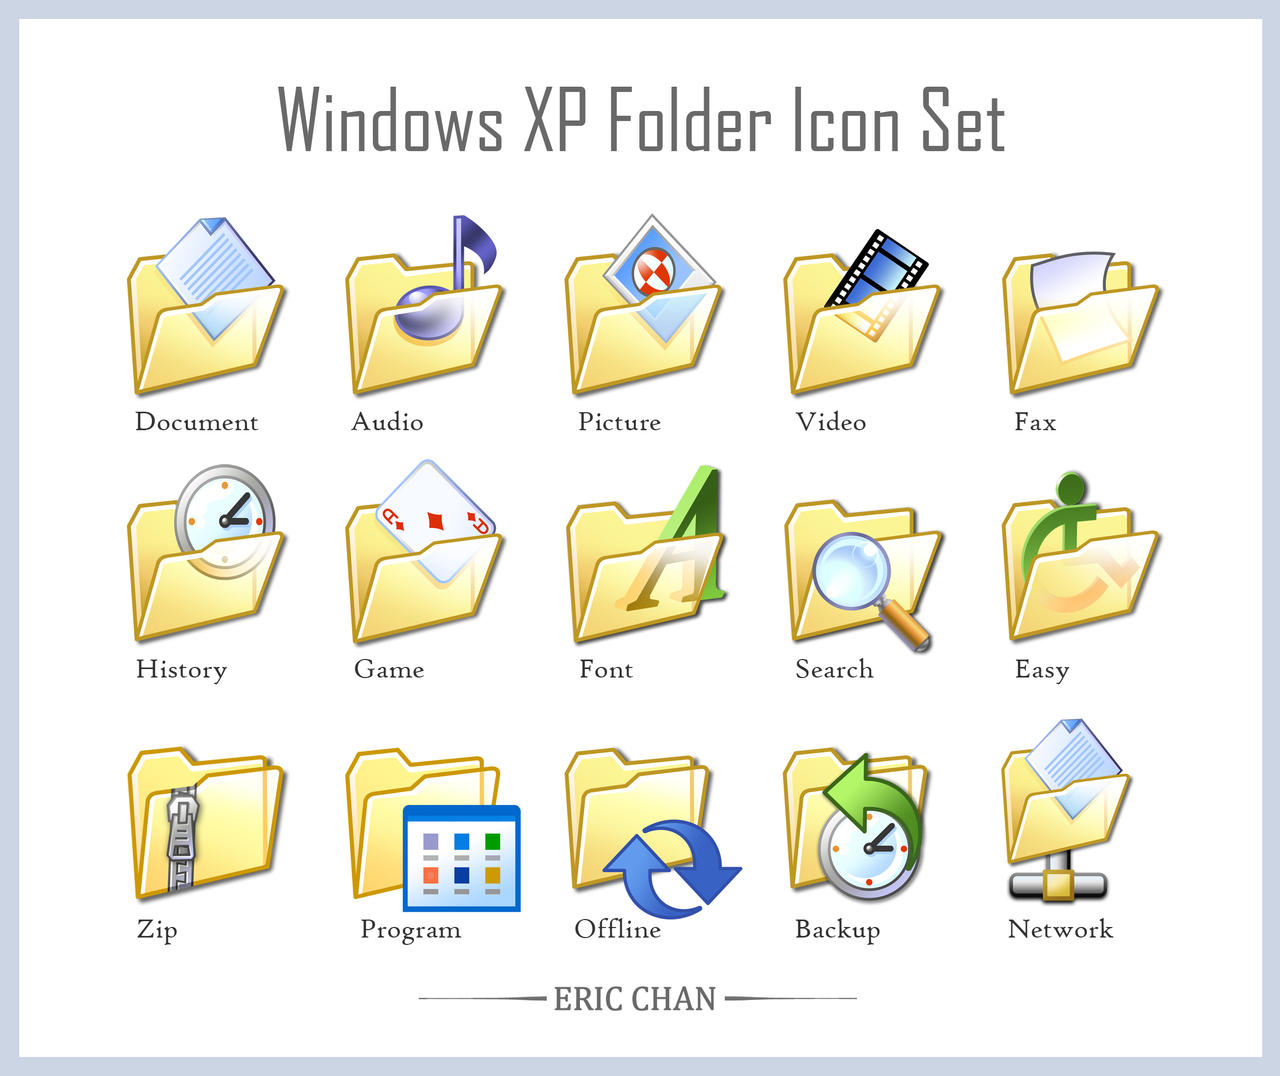 Windows XP folder icon set by eric2b01 on DeviantArt